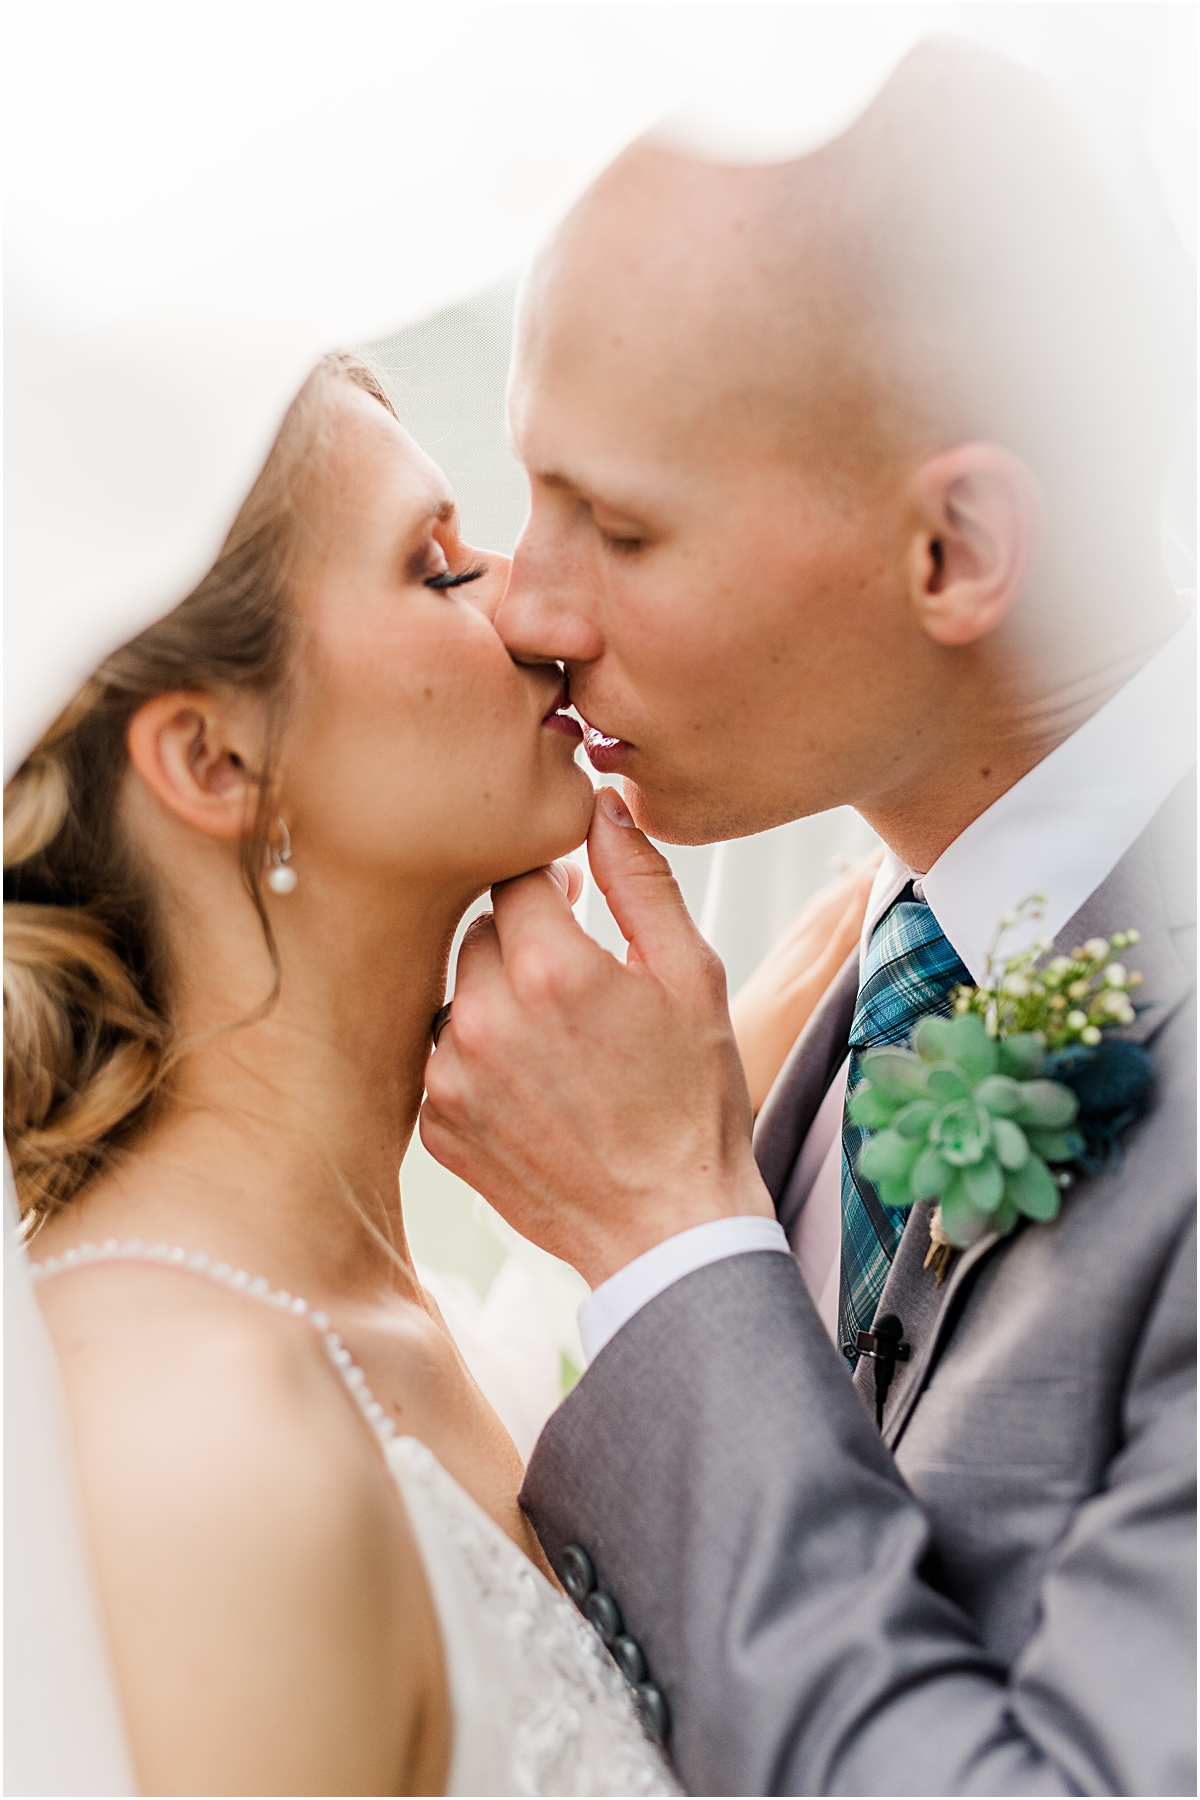 Luke and Brynn kissing under her veil taken by a wedding photographer